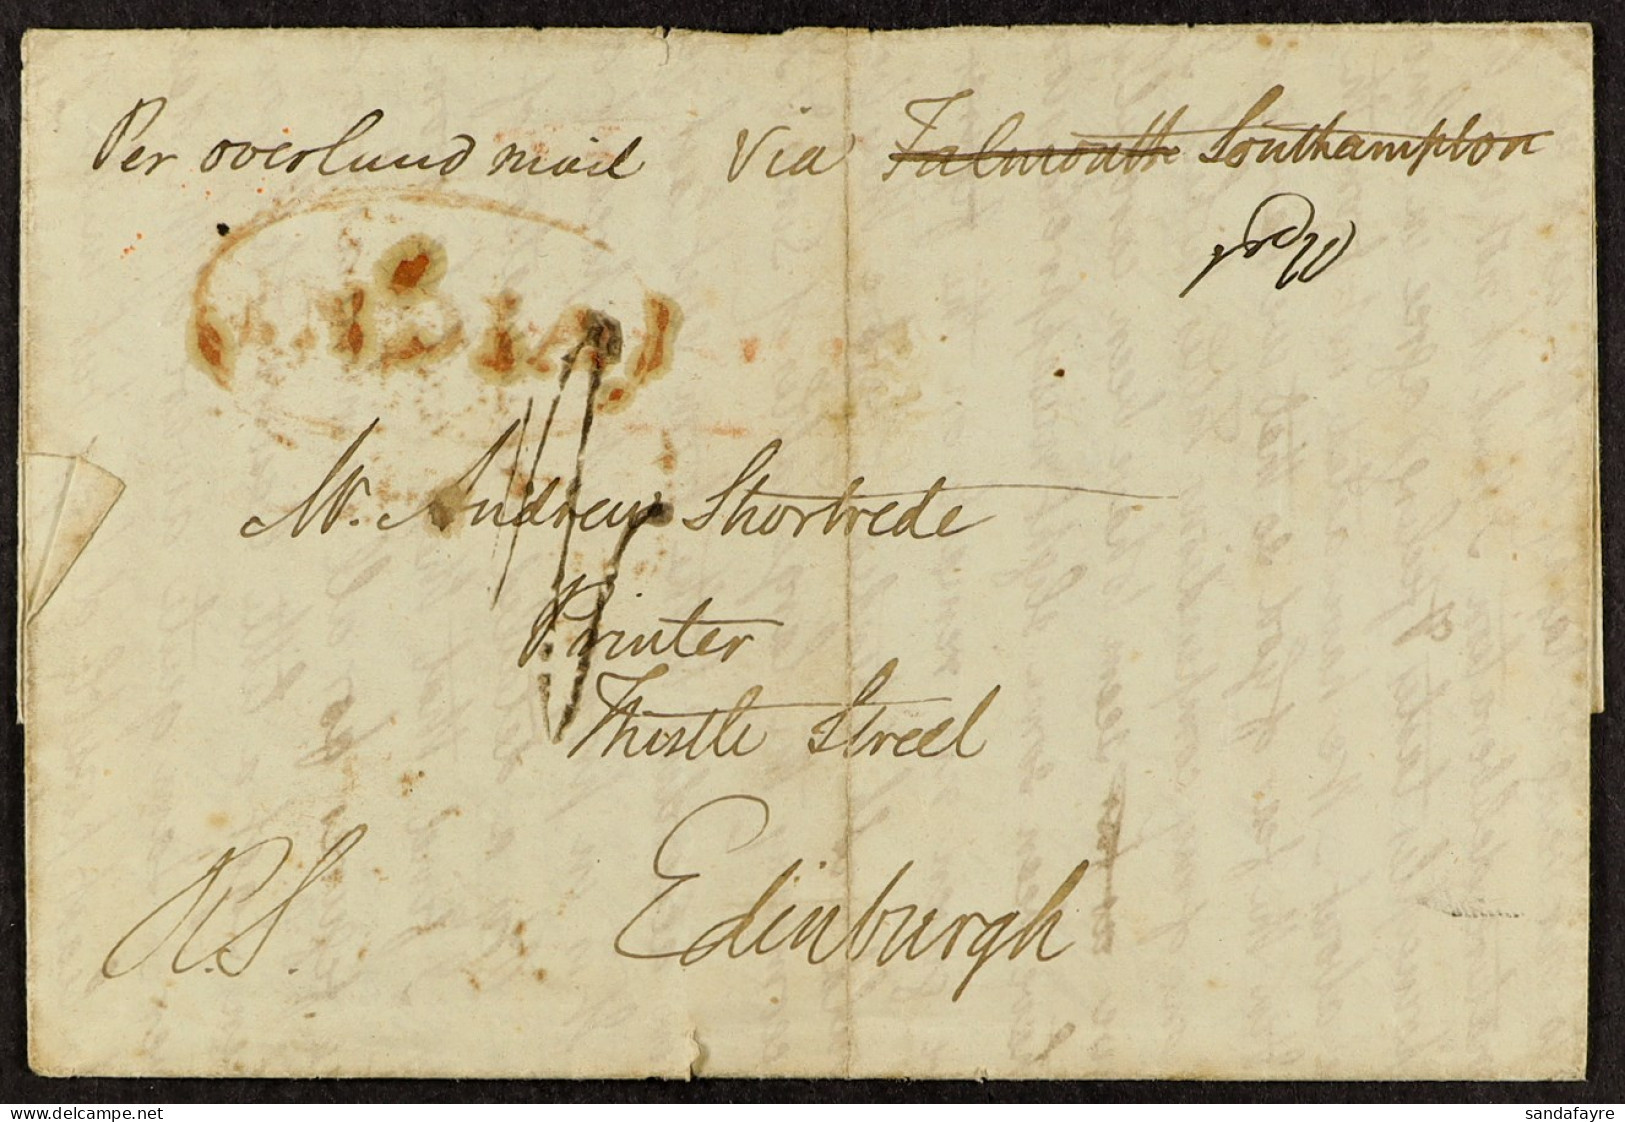 STAMP - 1843 (19th Dec) A Letter With A Number Of Postal Markings From Allahabad, INDIA, To Edinburgh, Scotland, Via Sou - ...-1840 Préphilatélie